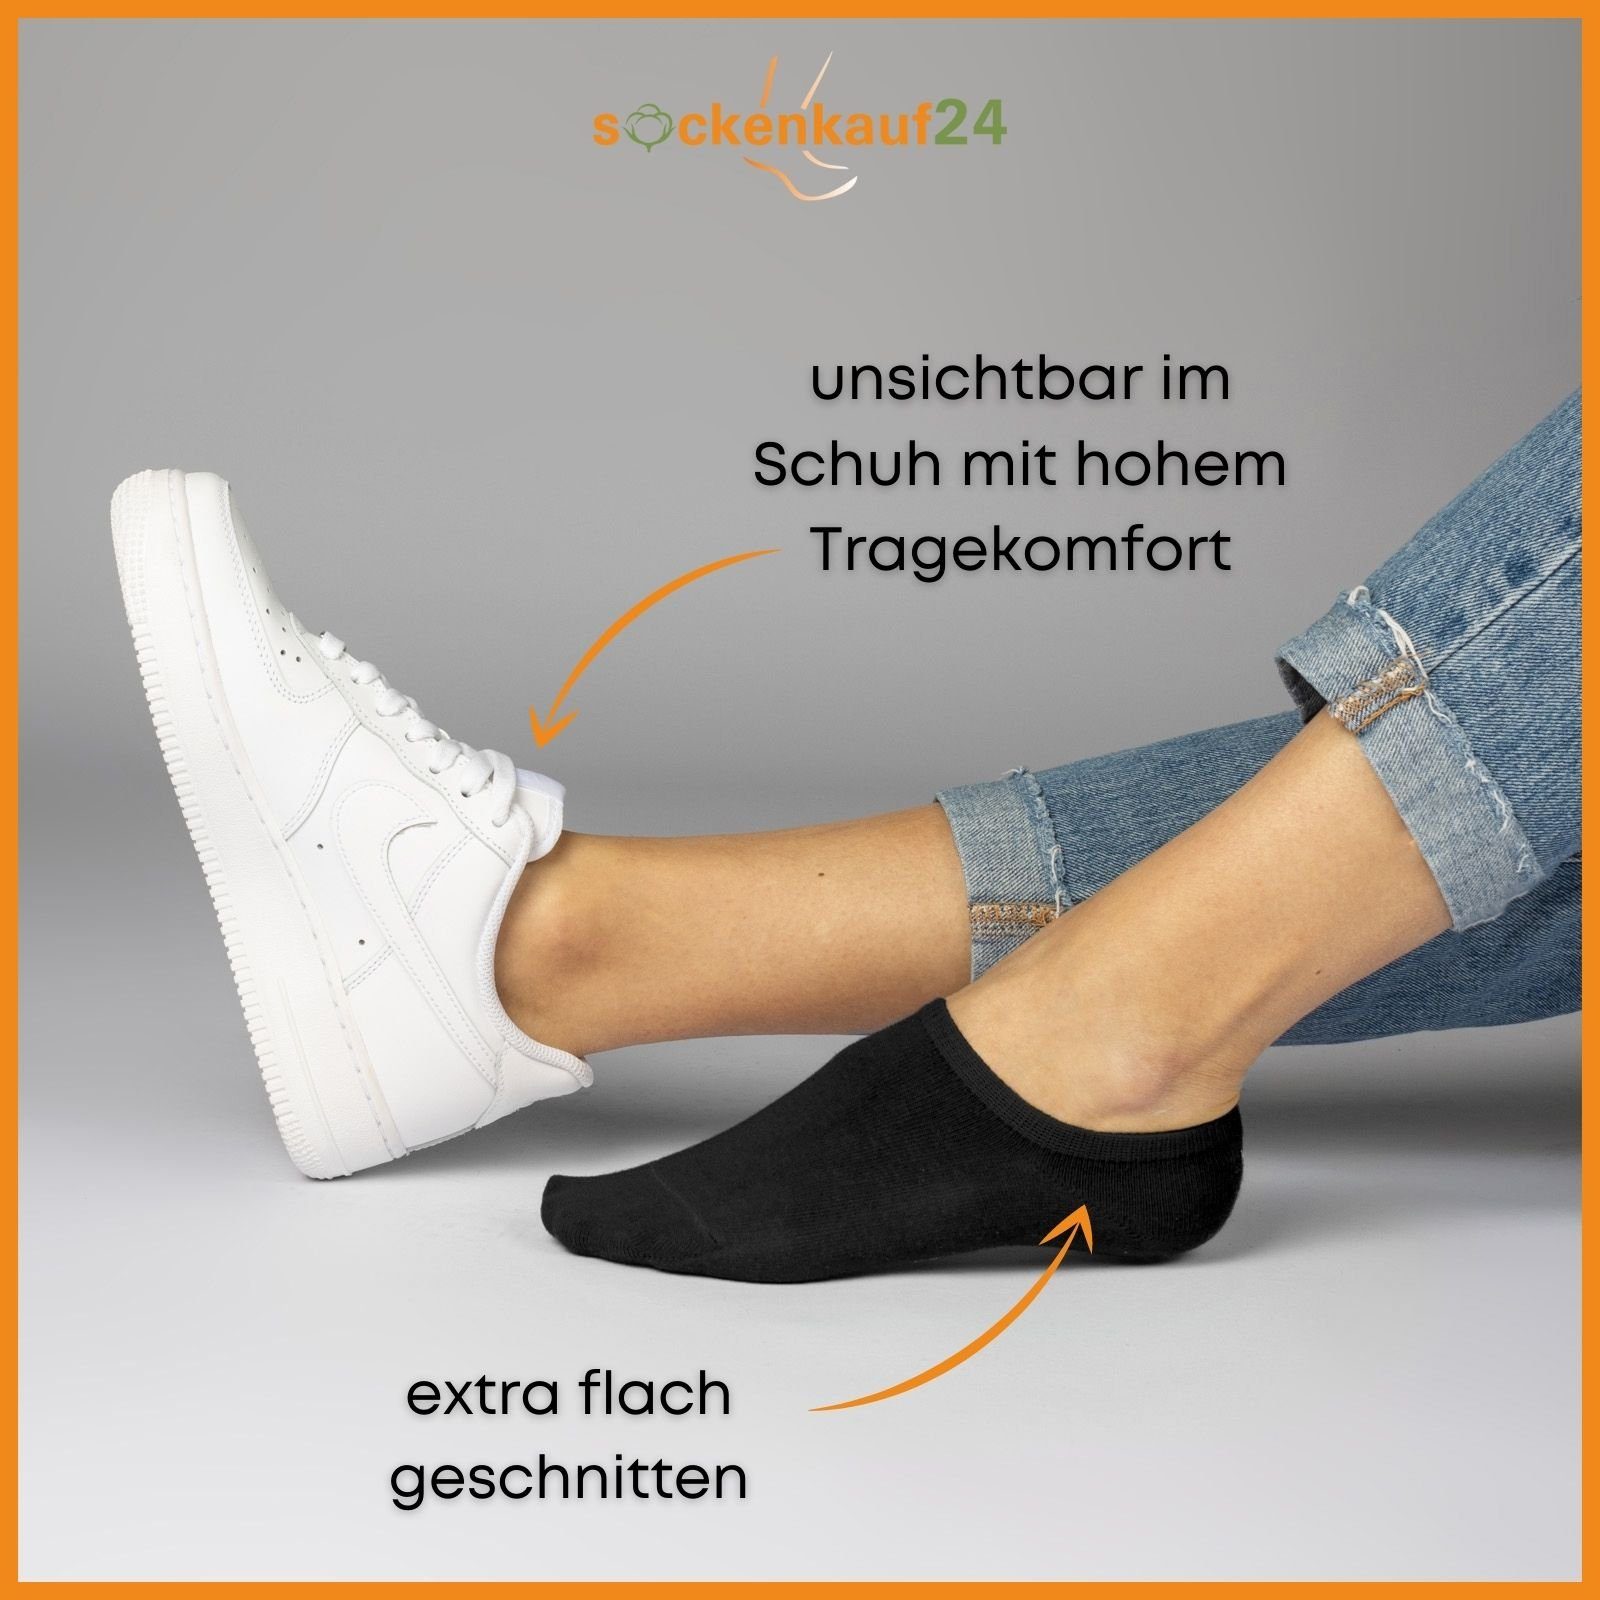 Paar Sneakersocken Damen - gegen 16805 & sockenkauf24 Herren mit WP Silikonpad Verrutschen 10 Socken kurze 39-42) Füßlinge unsichtbare (Schwarz/Grau,